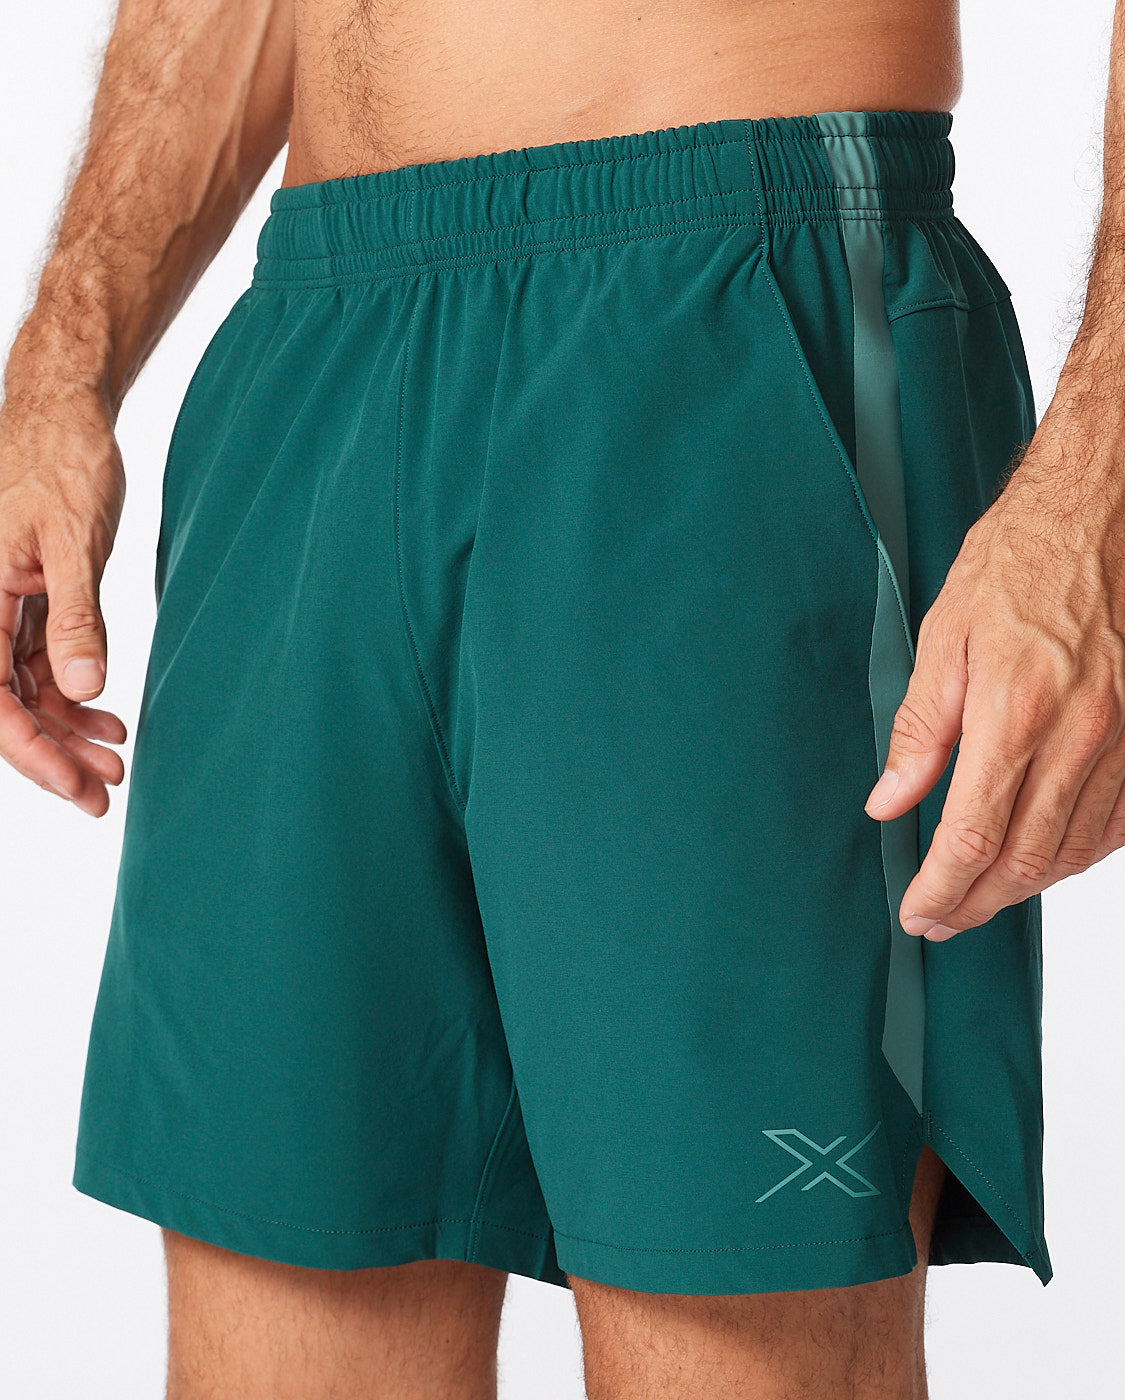 Motion 6 inch shorts - Pine/silver sage - Shorts